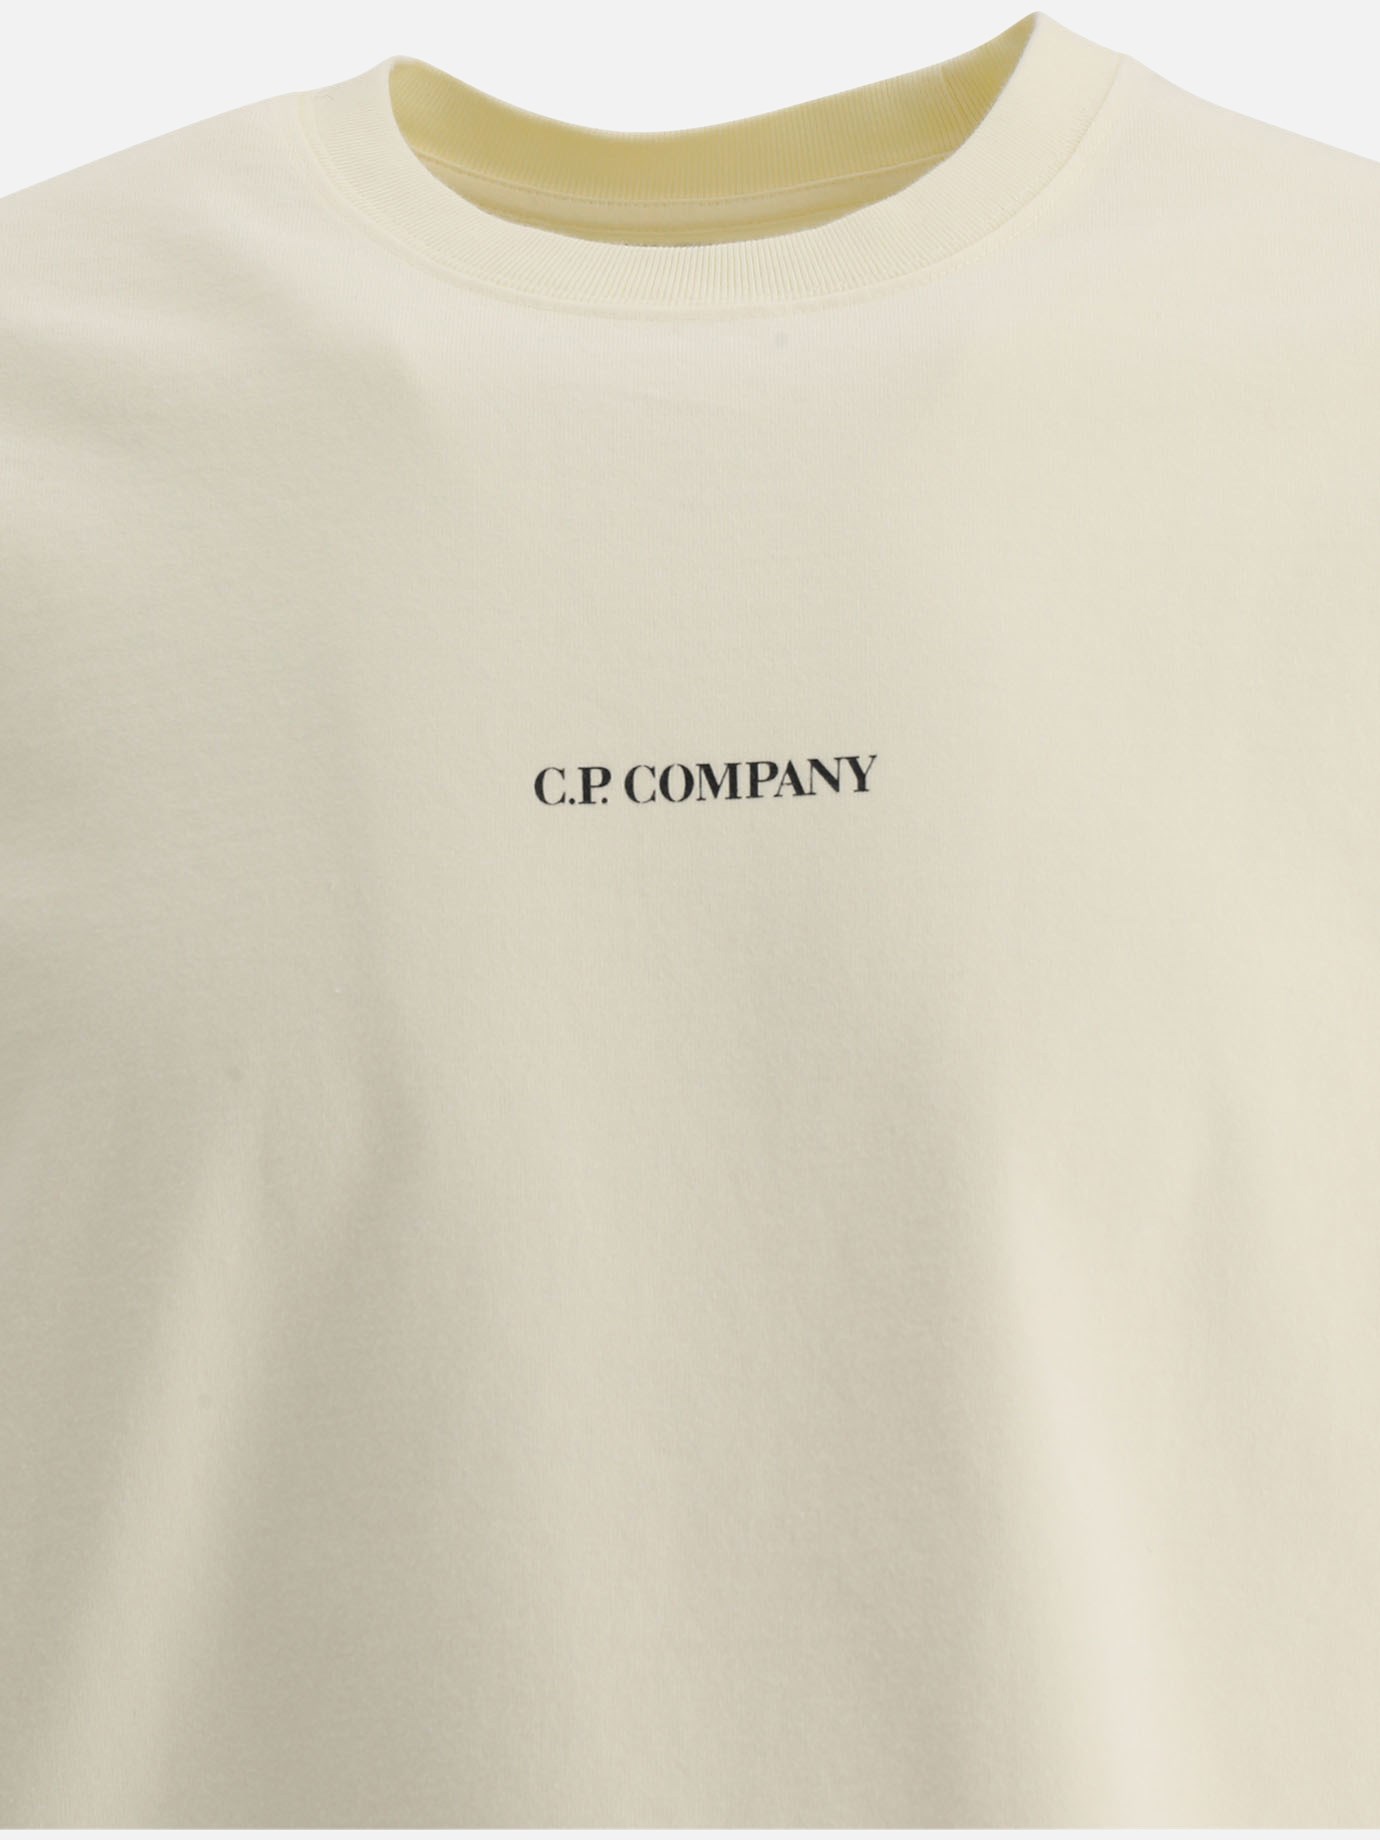  Heavy Jersey  t-shirt by C.P. Company